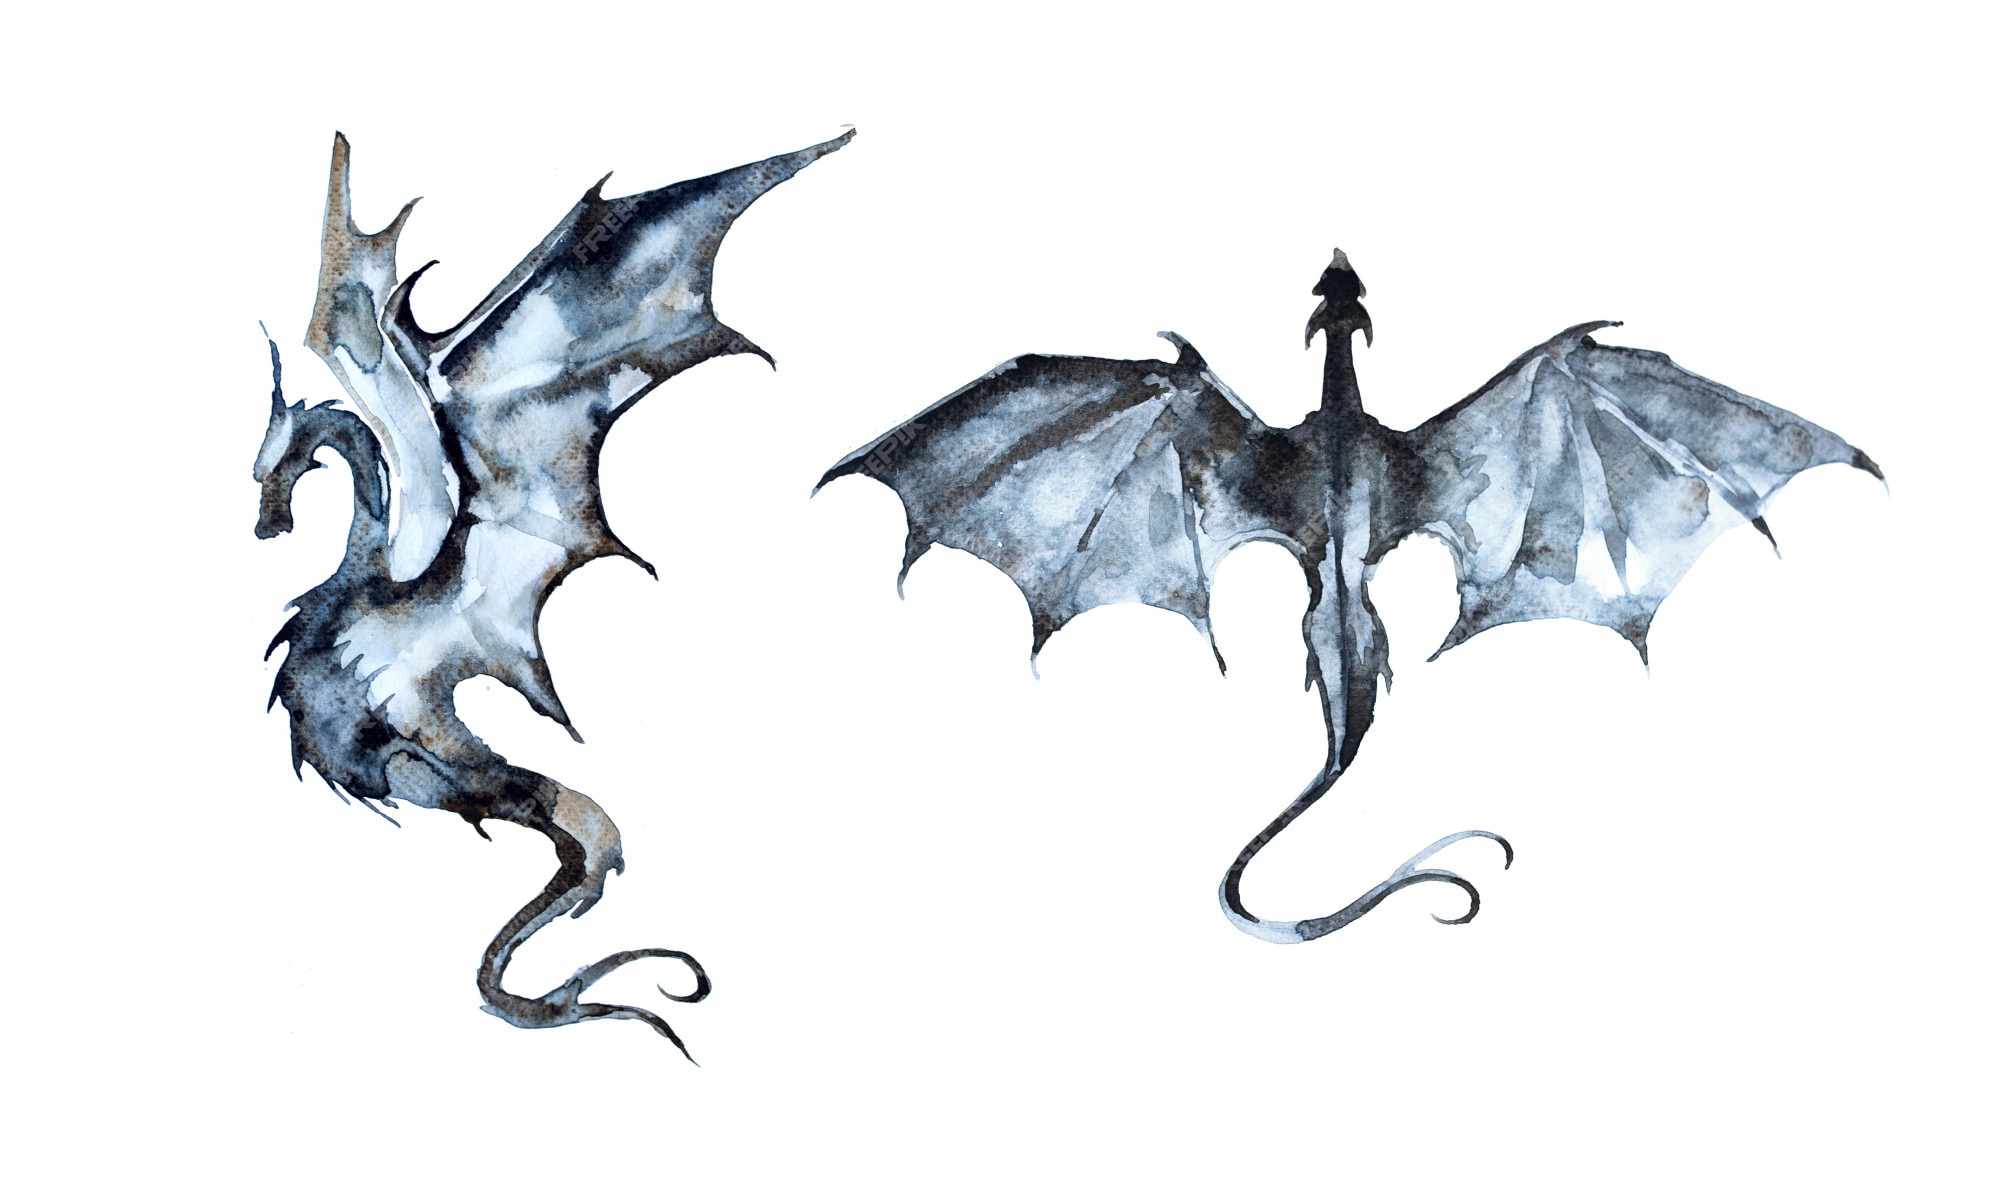 hand-painted-watercolor-dragon-illustration_98401-2.jpg?w=2000